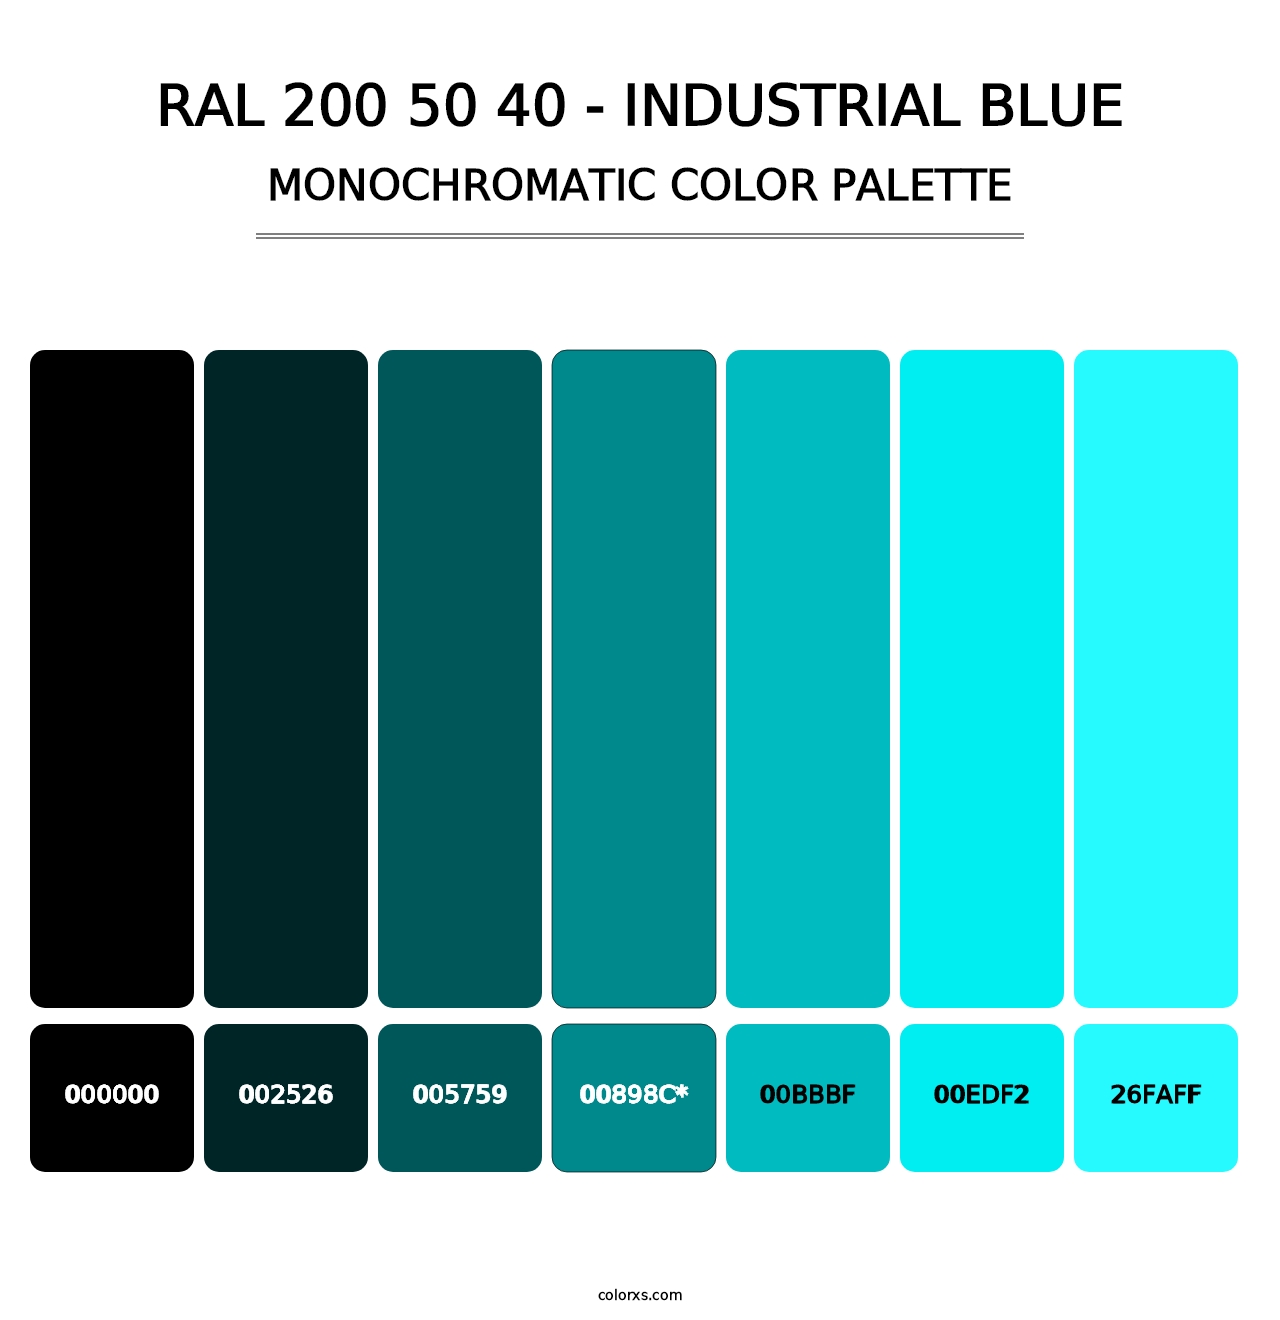 RAL 200 50 40 - Industrial Blue - Monochromatic Color Palette